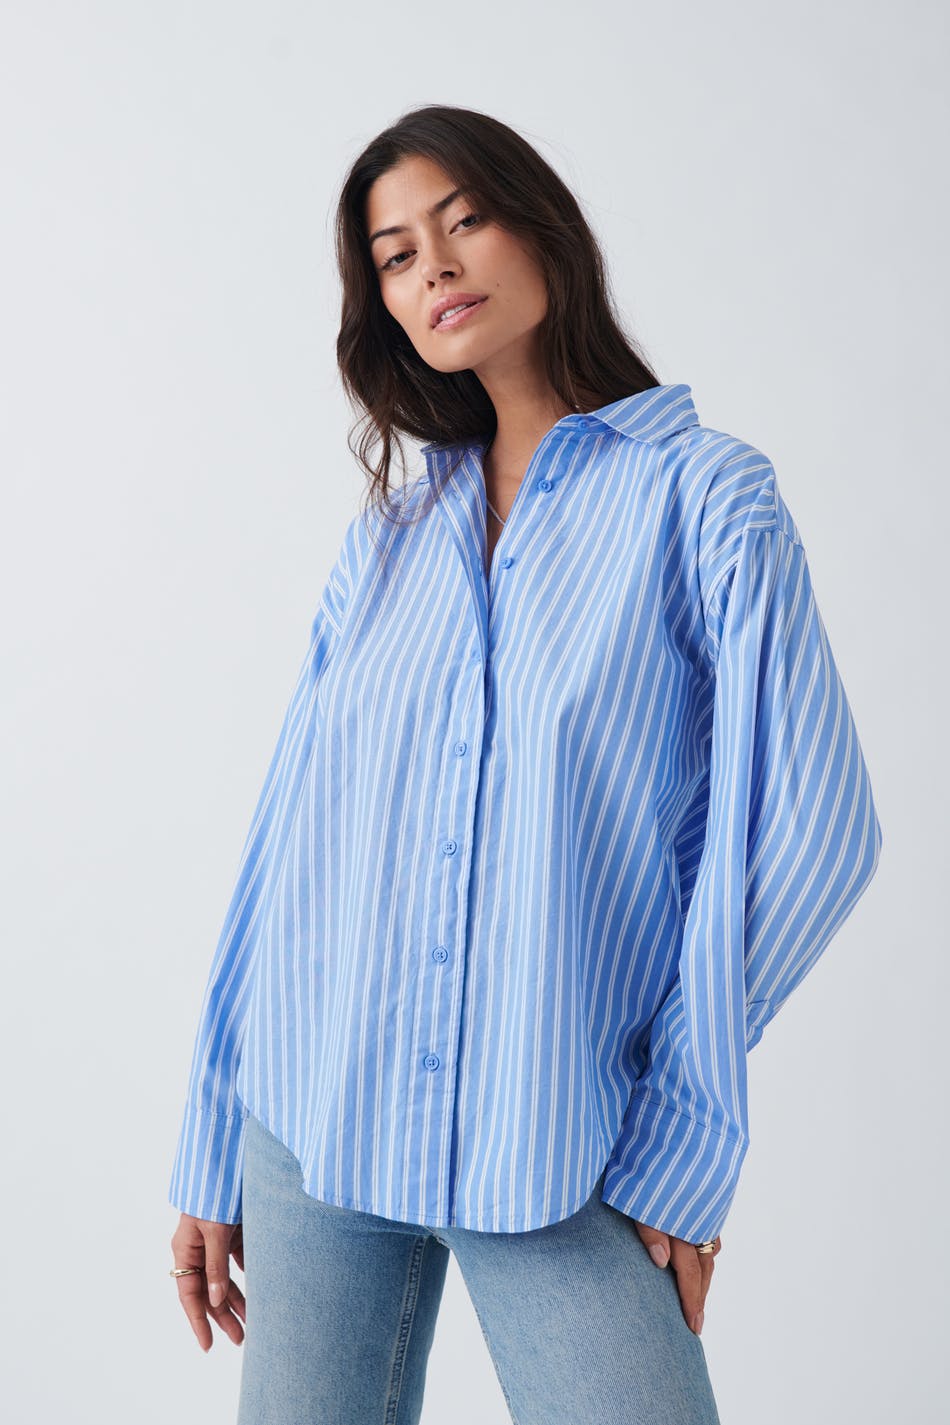 Gina Tricot - Poplin shirt - skjortor - Blue - M - Female